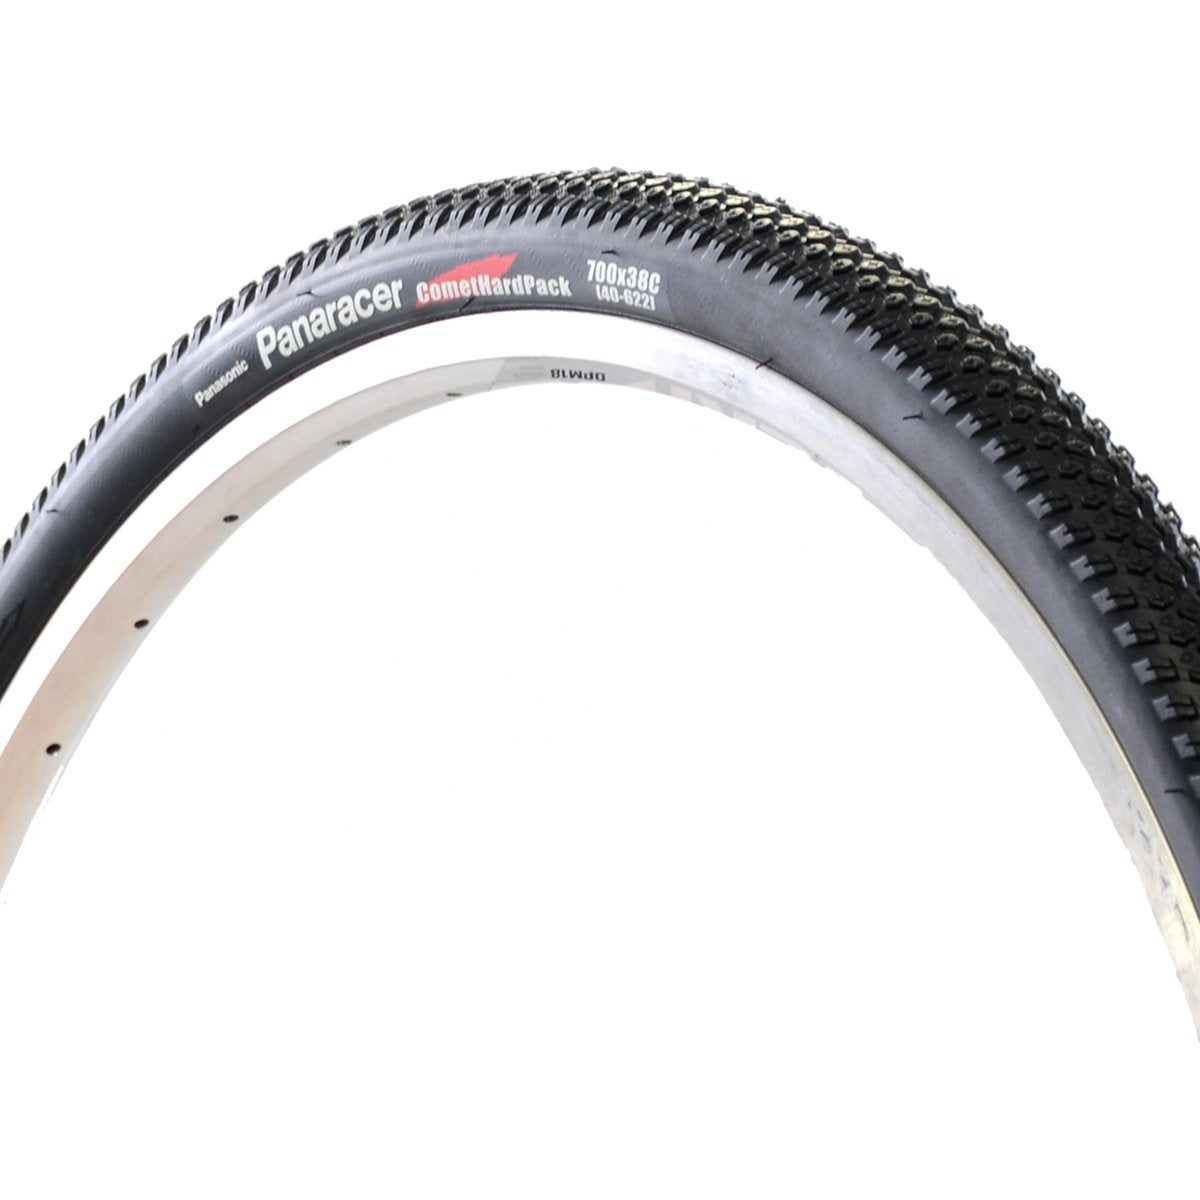 Panaracer - Comet HardPack (MTB) Wire Bead Bicycle Tire